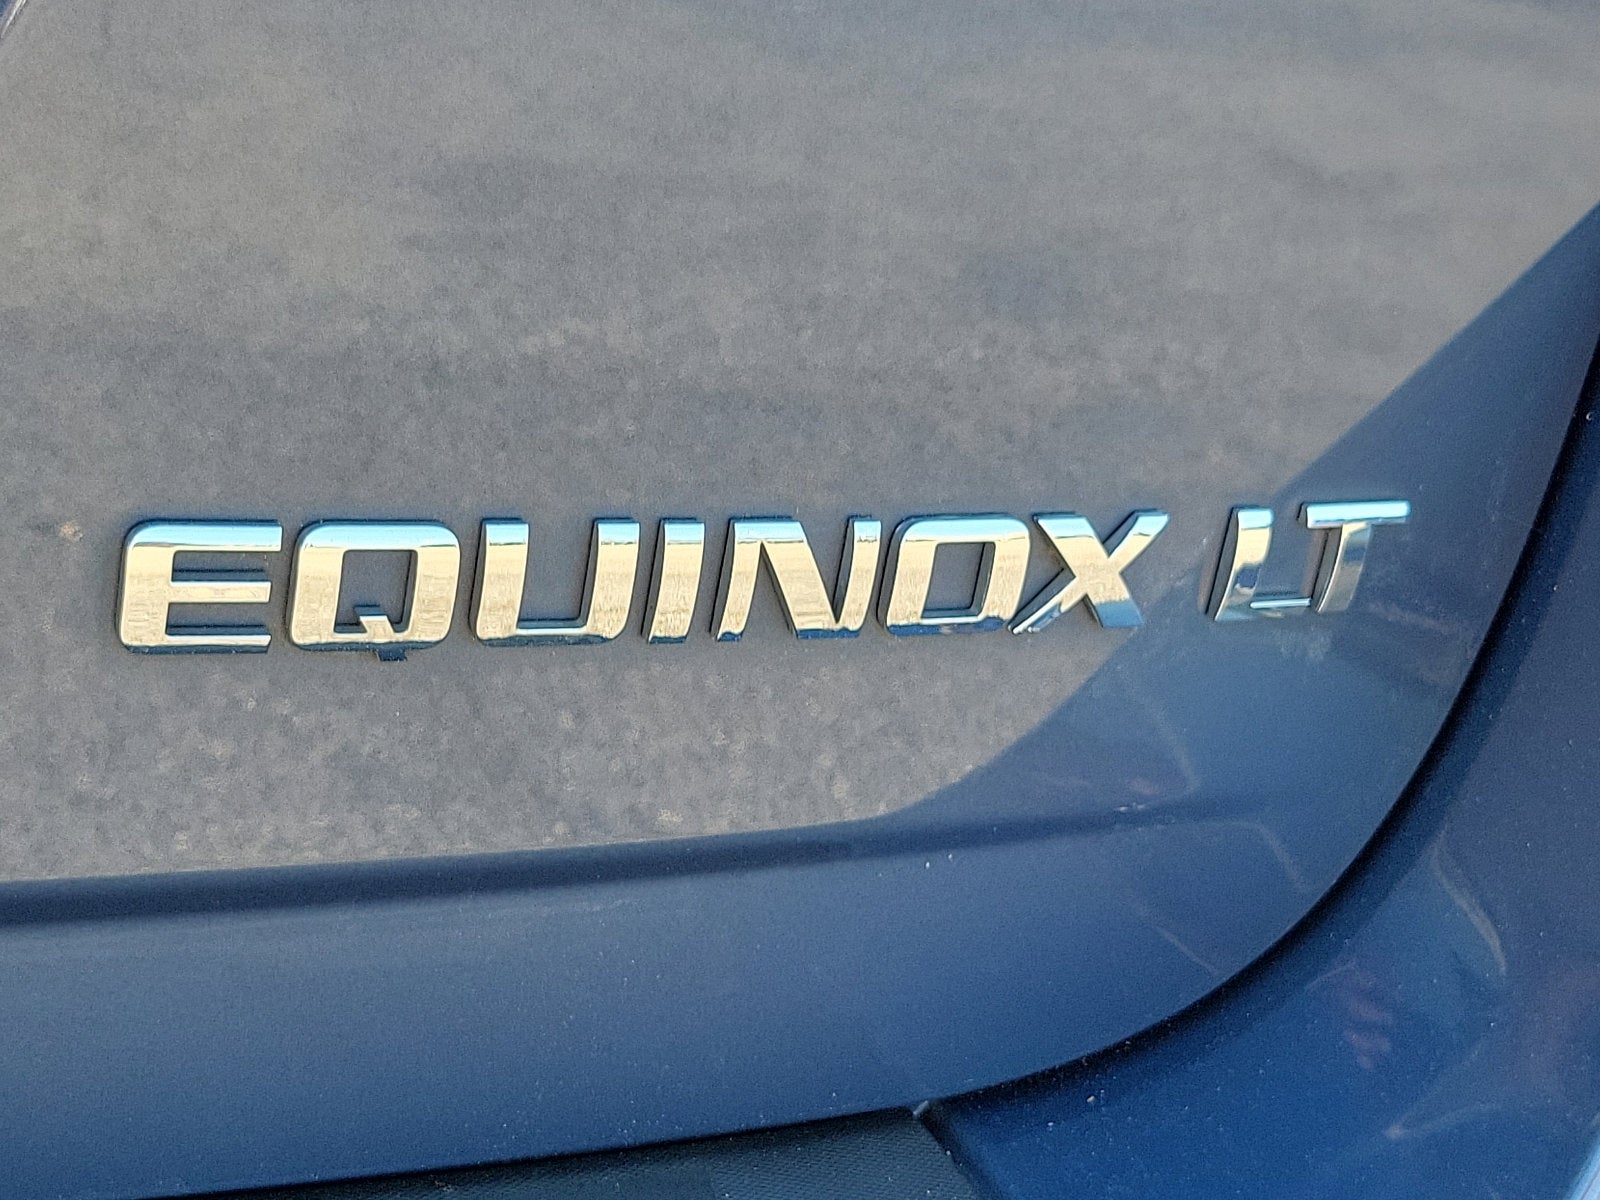 2012 Chevrolet Equinox LT w/2LT